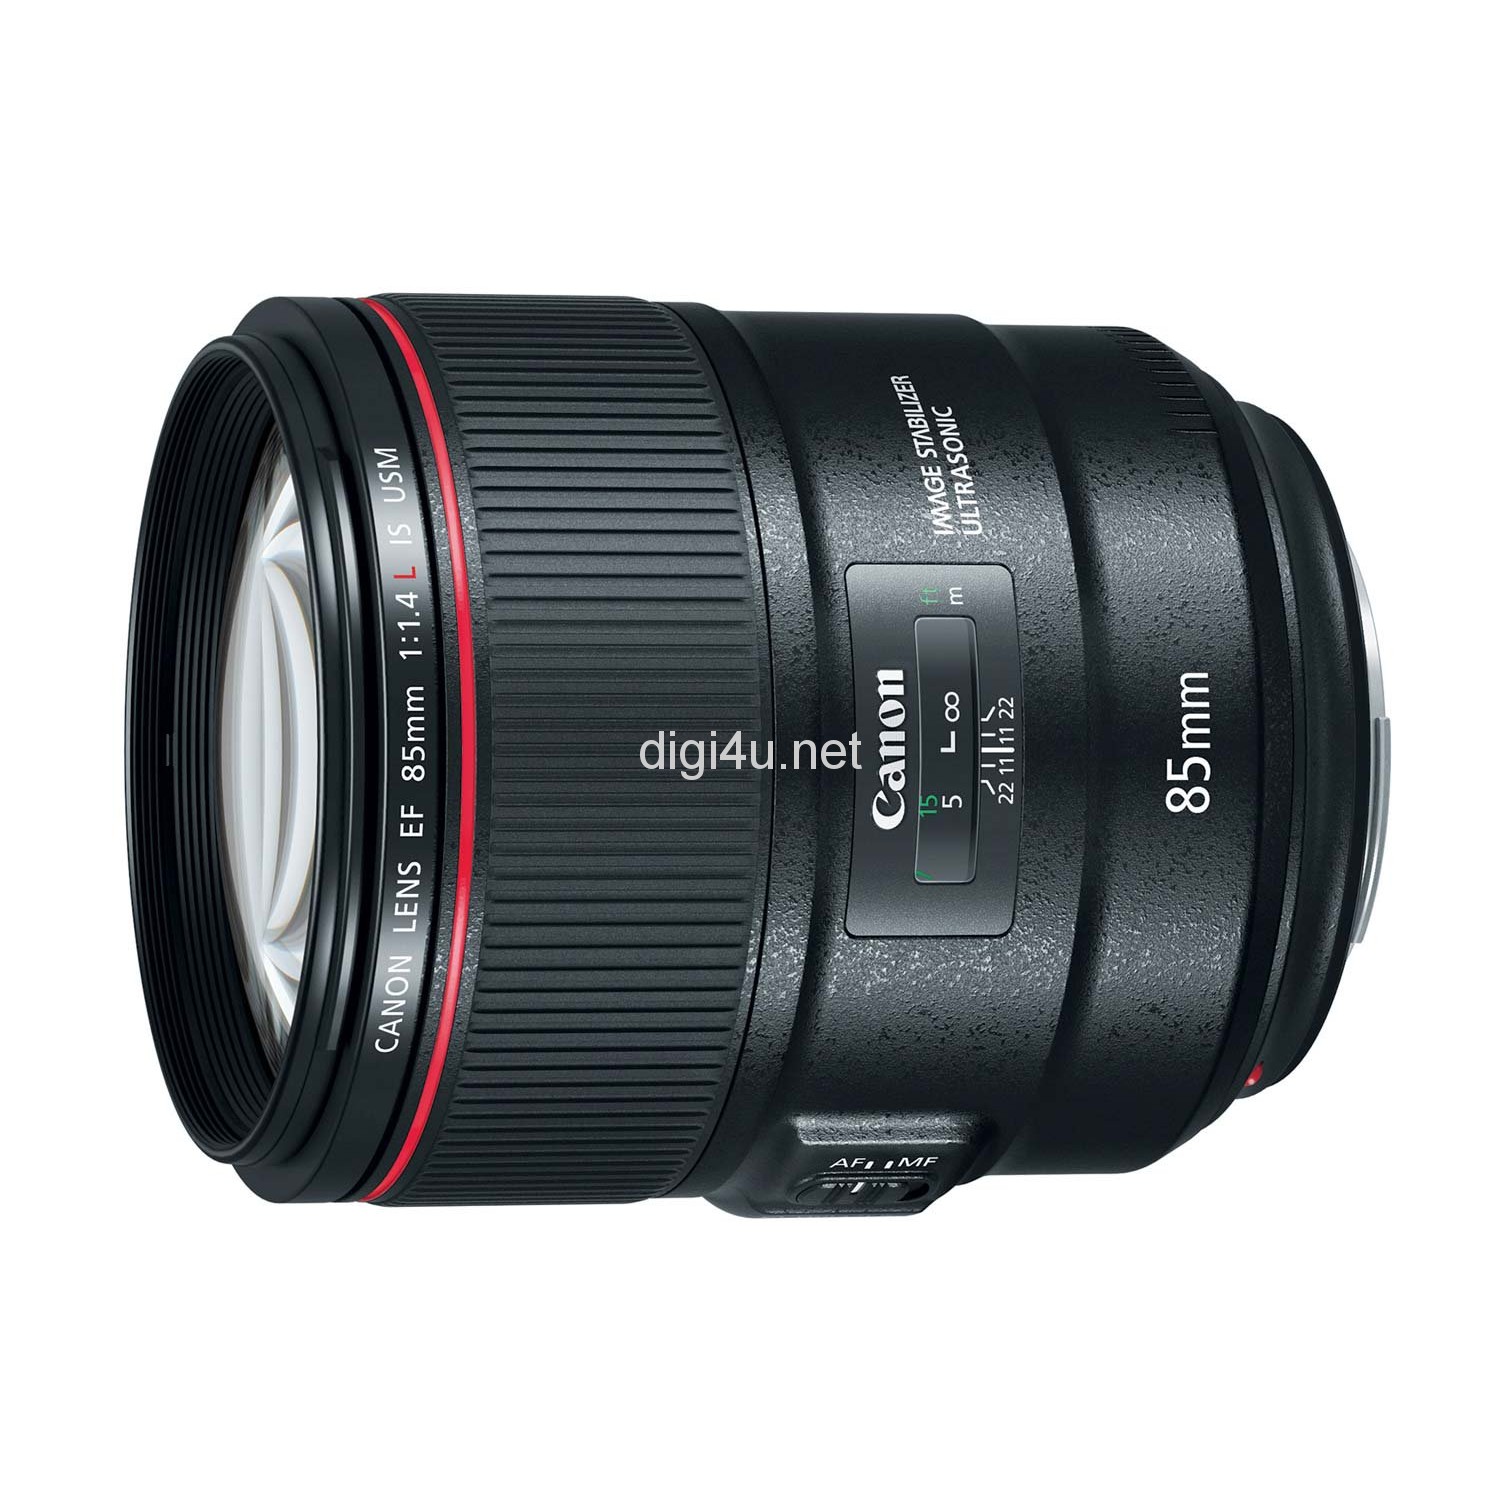  Canon lens 85mm f/1.4L IS USM (LBM)